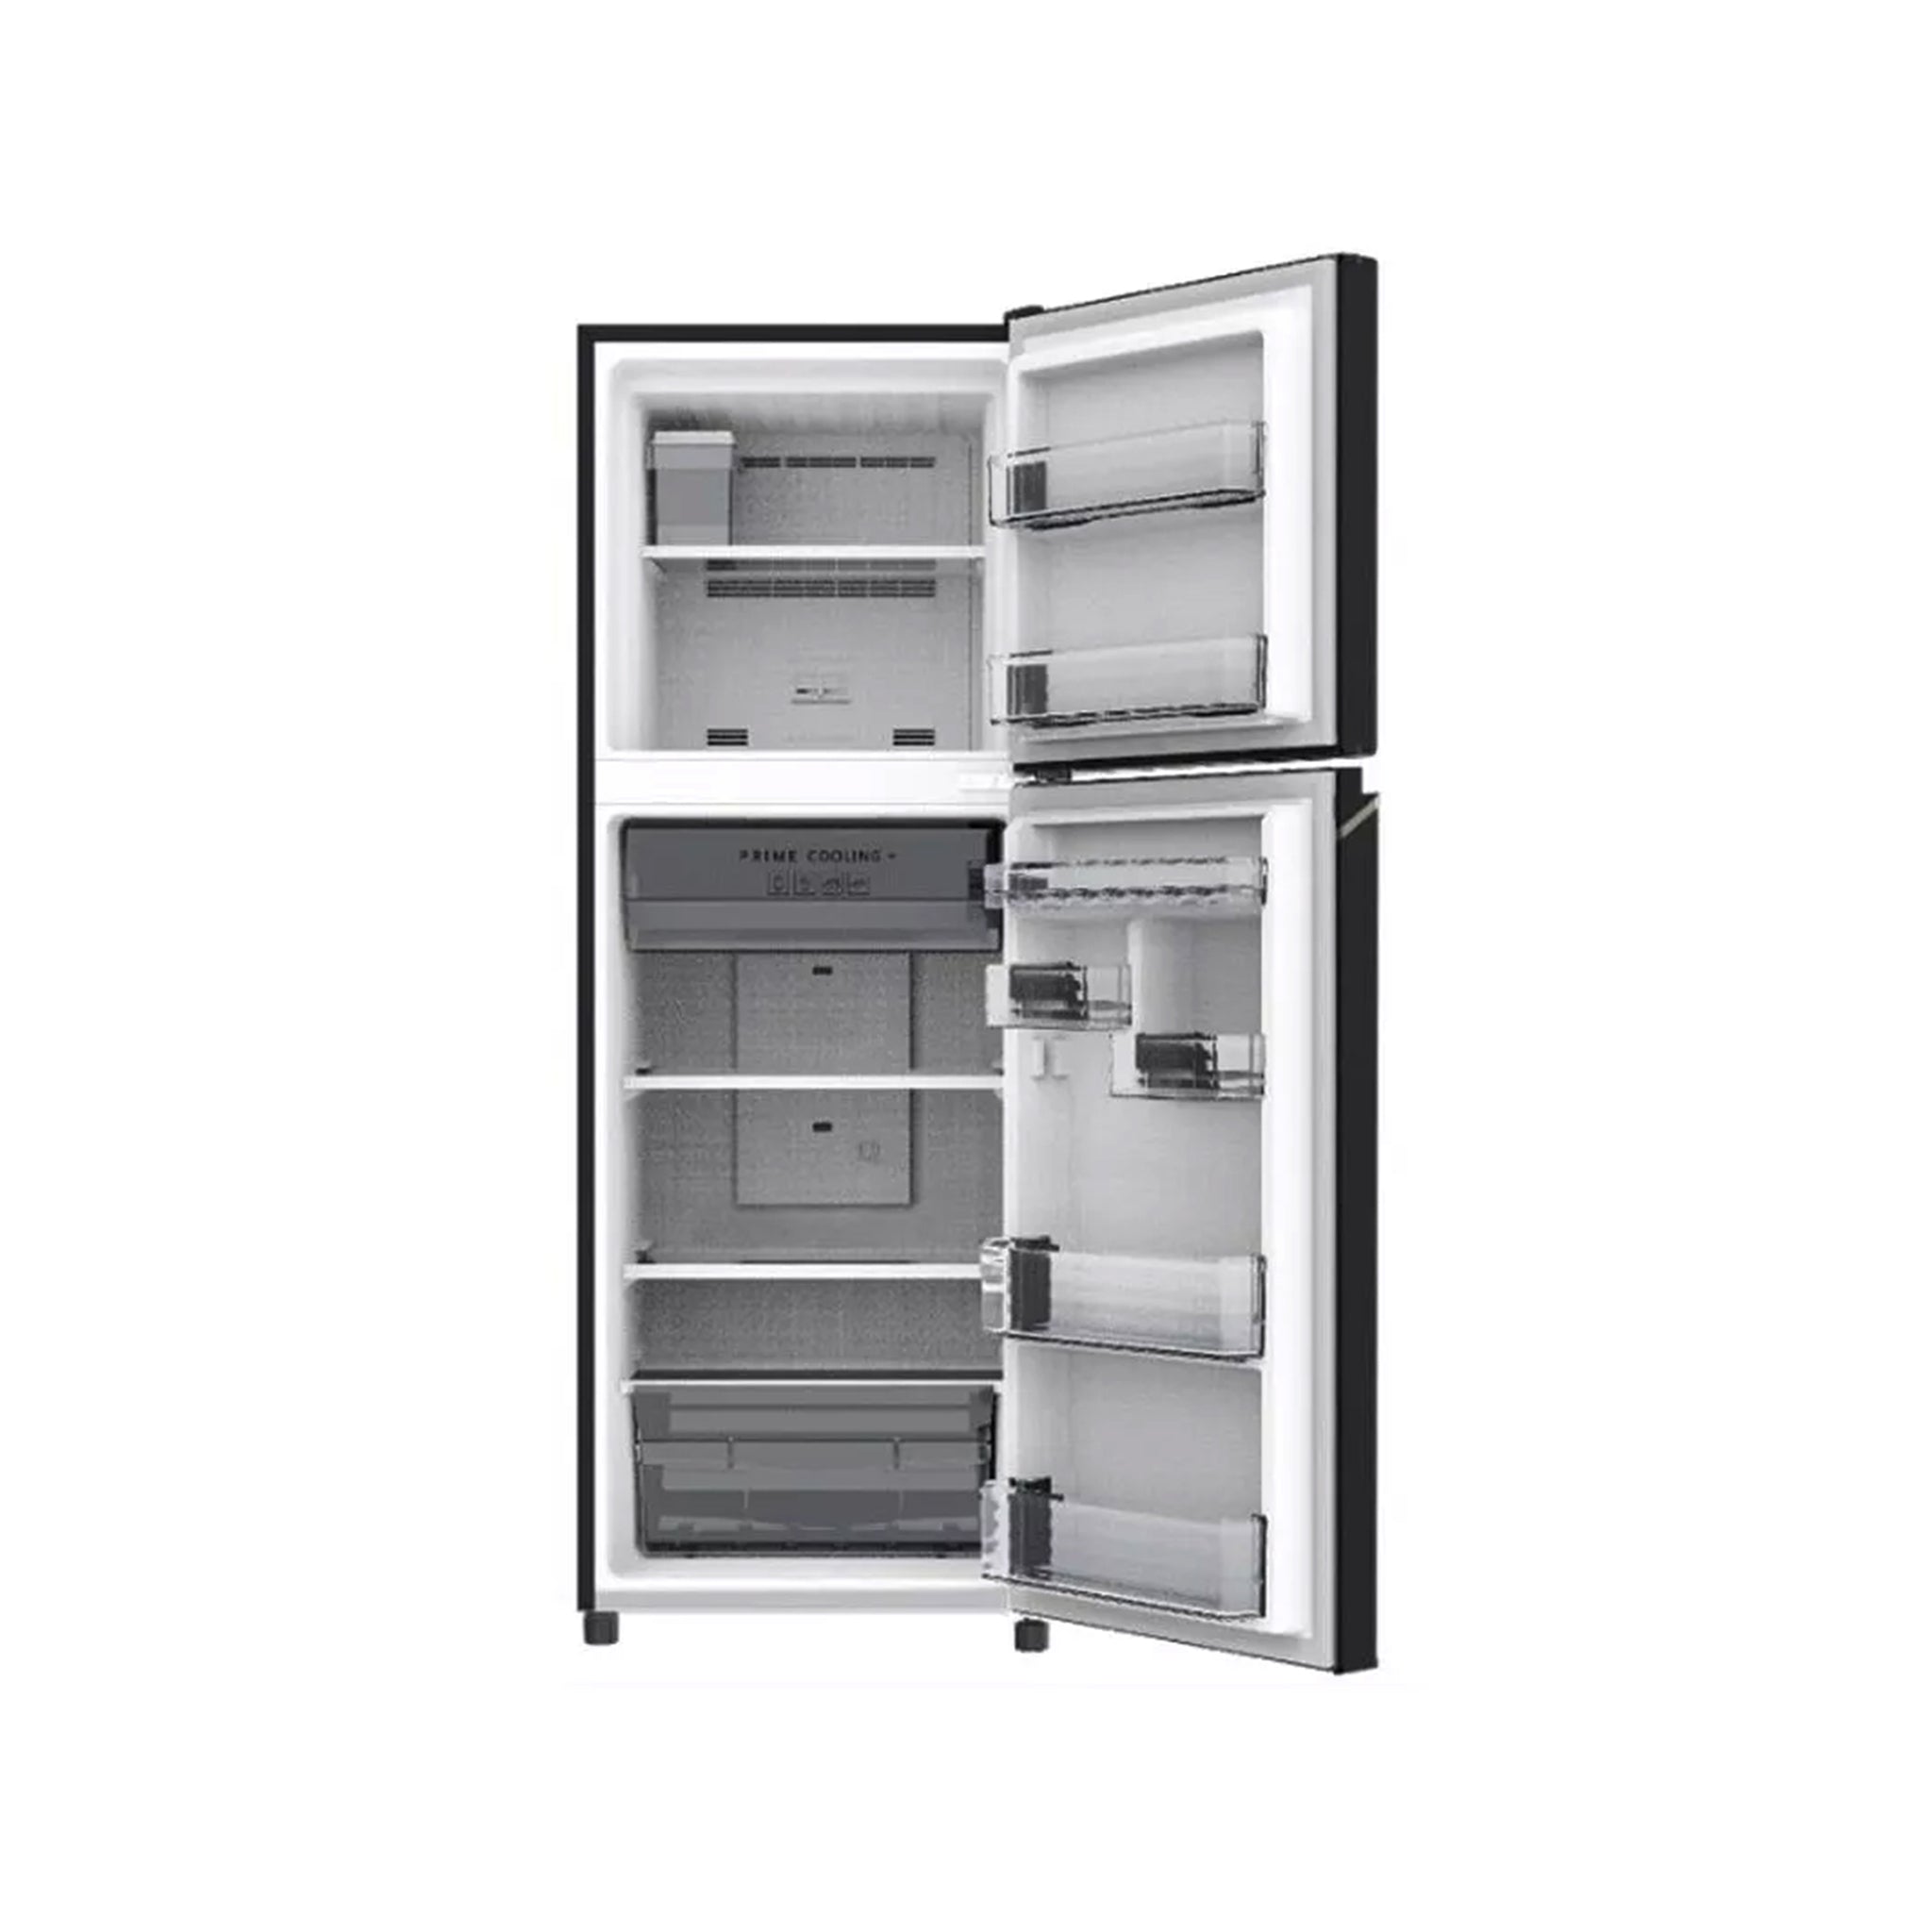 PANASONIC NR-BP242VD 2-Door Top Freezer Fridge No Frost Inverter Refrigerator Panasonic